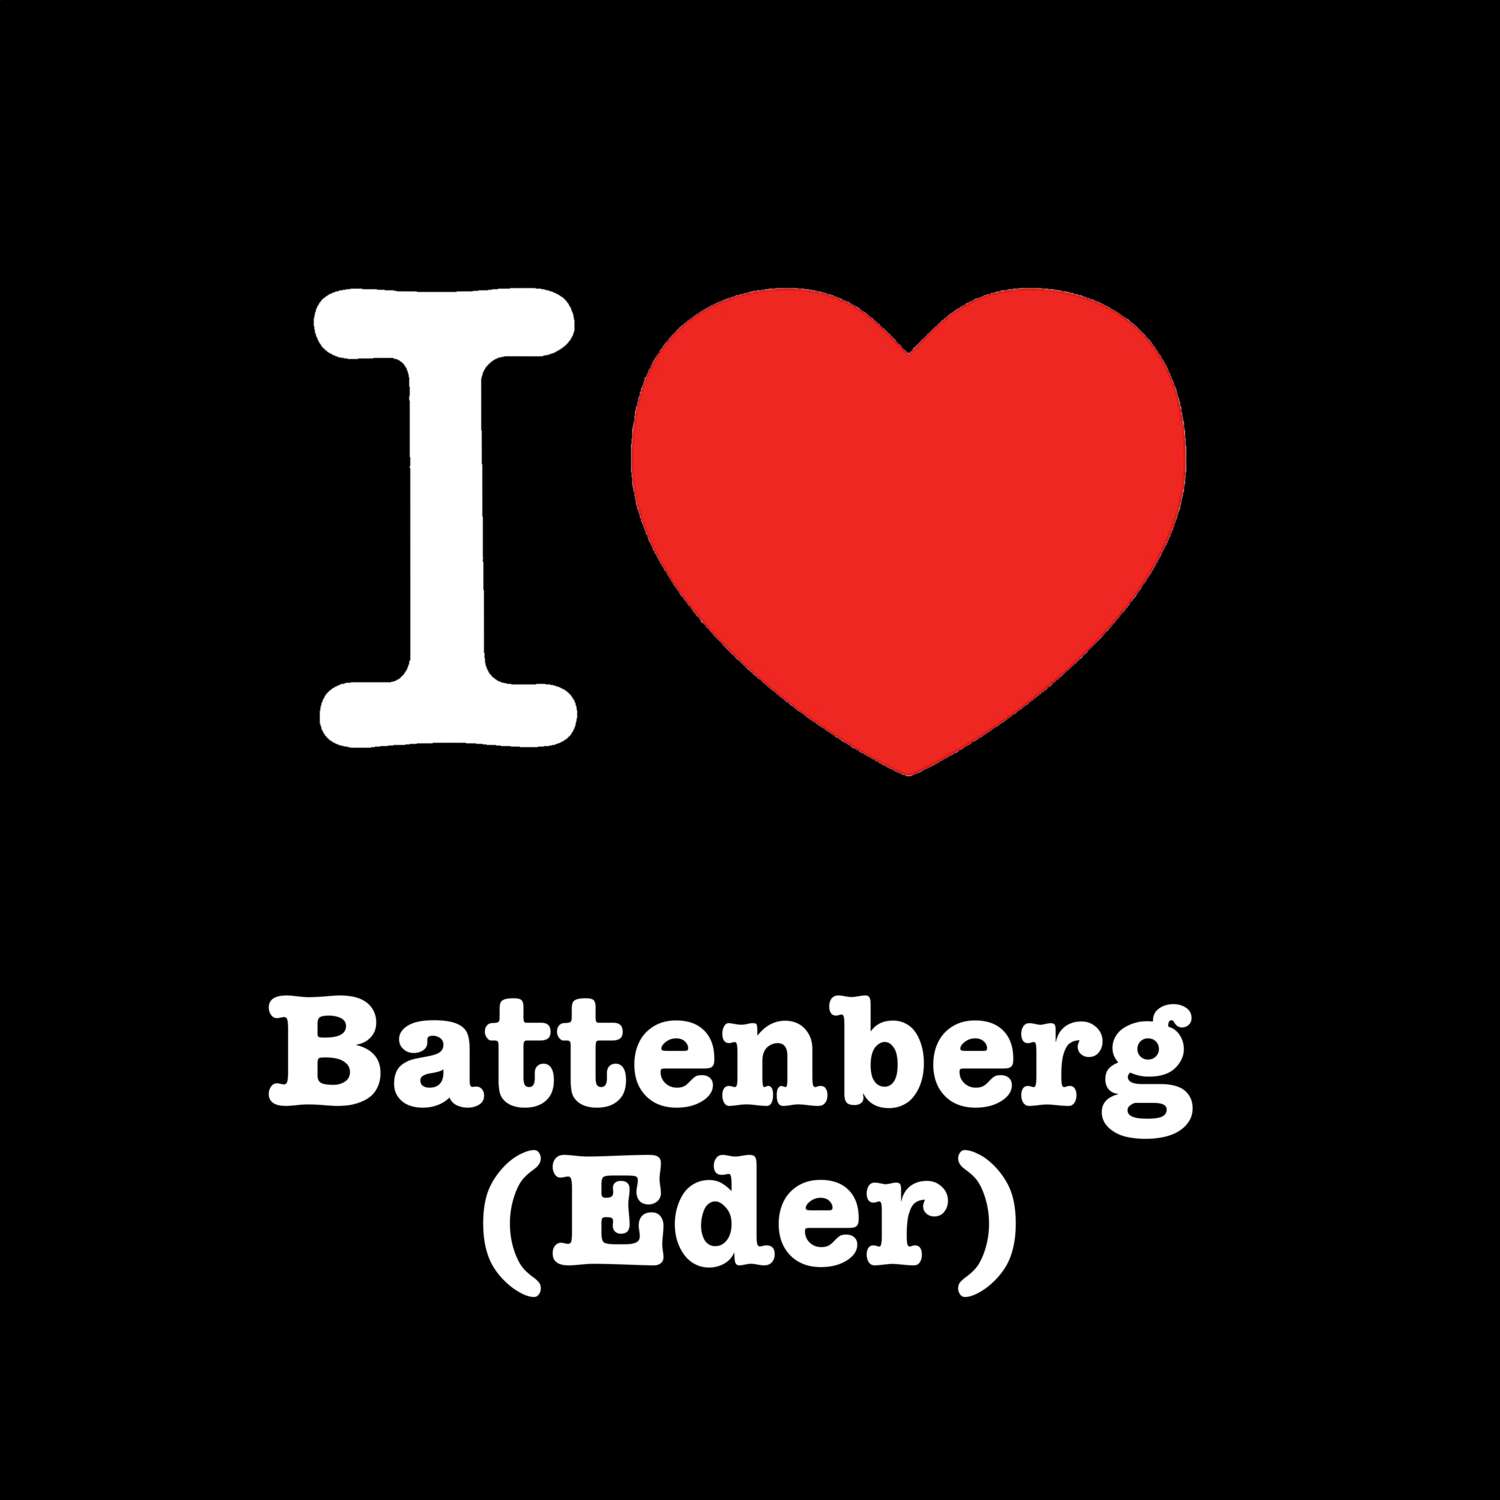 Battenberg (Eder) T-Shirt »I love«